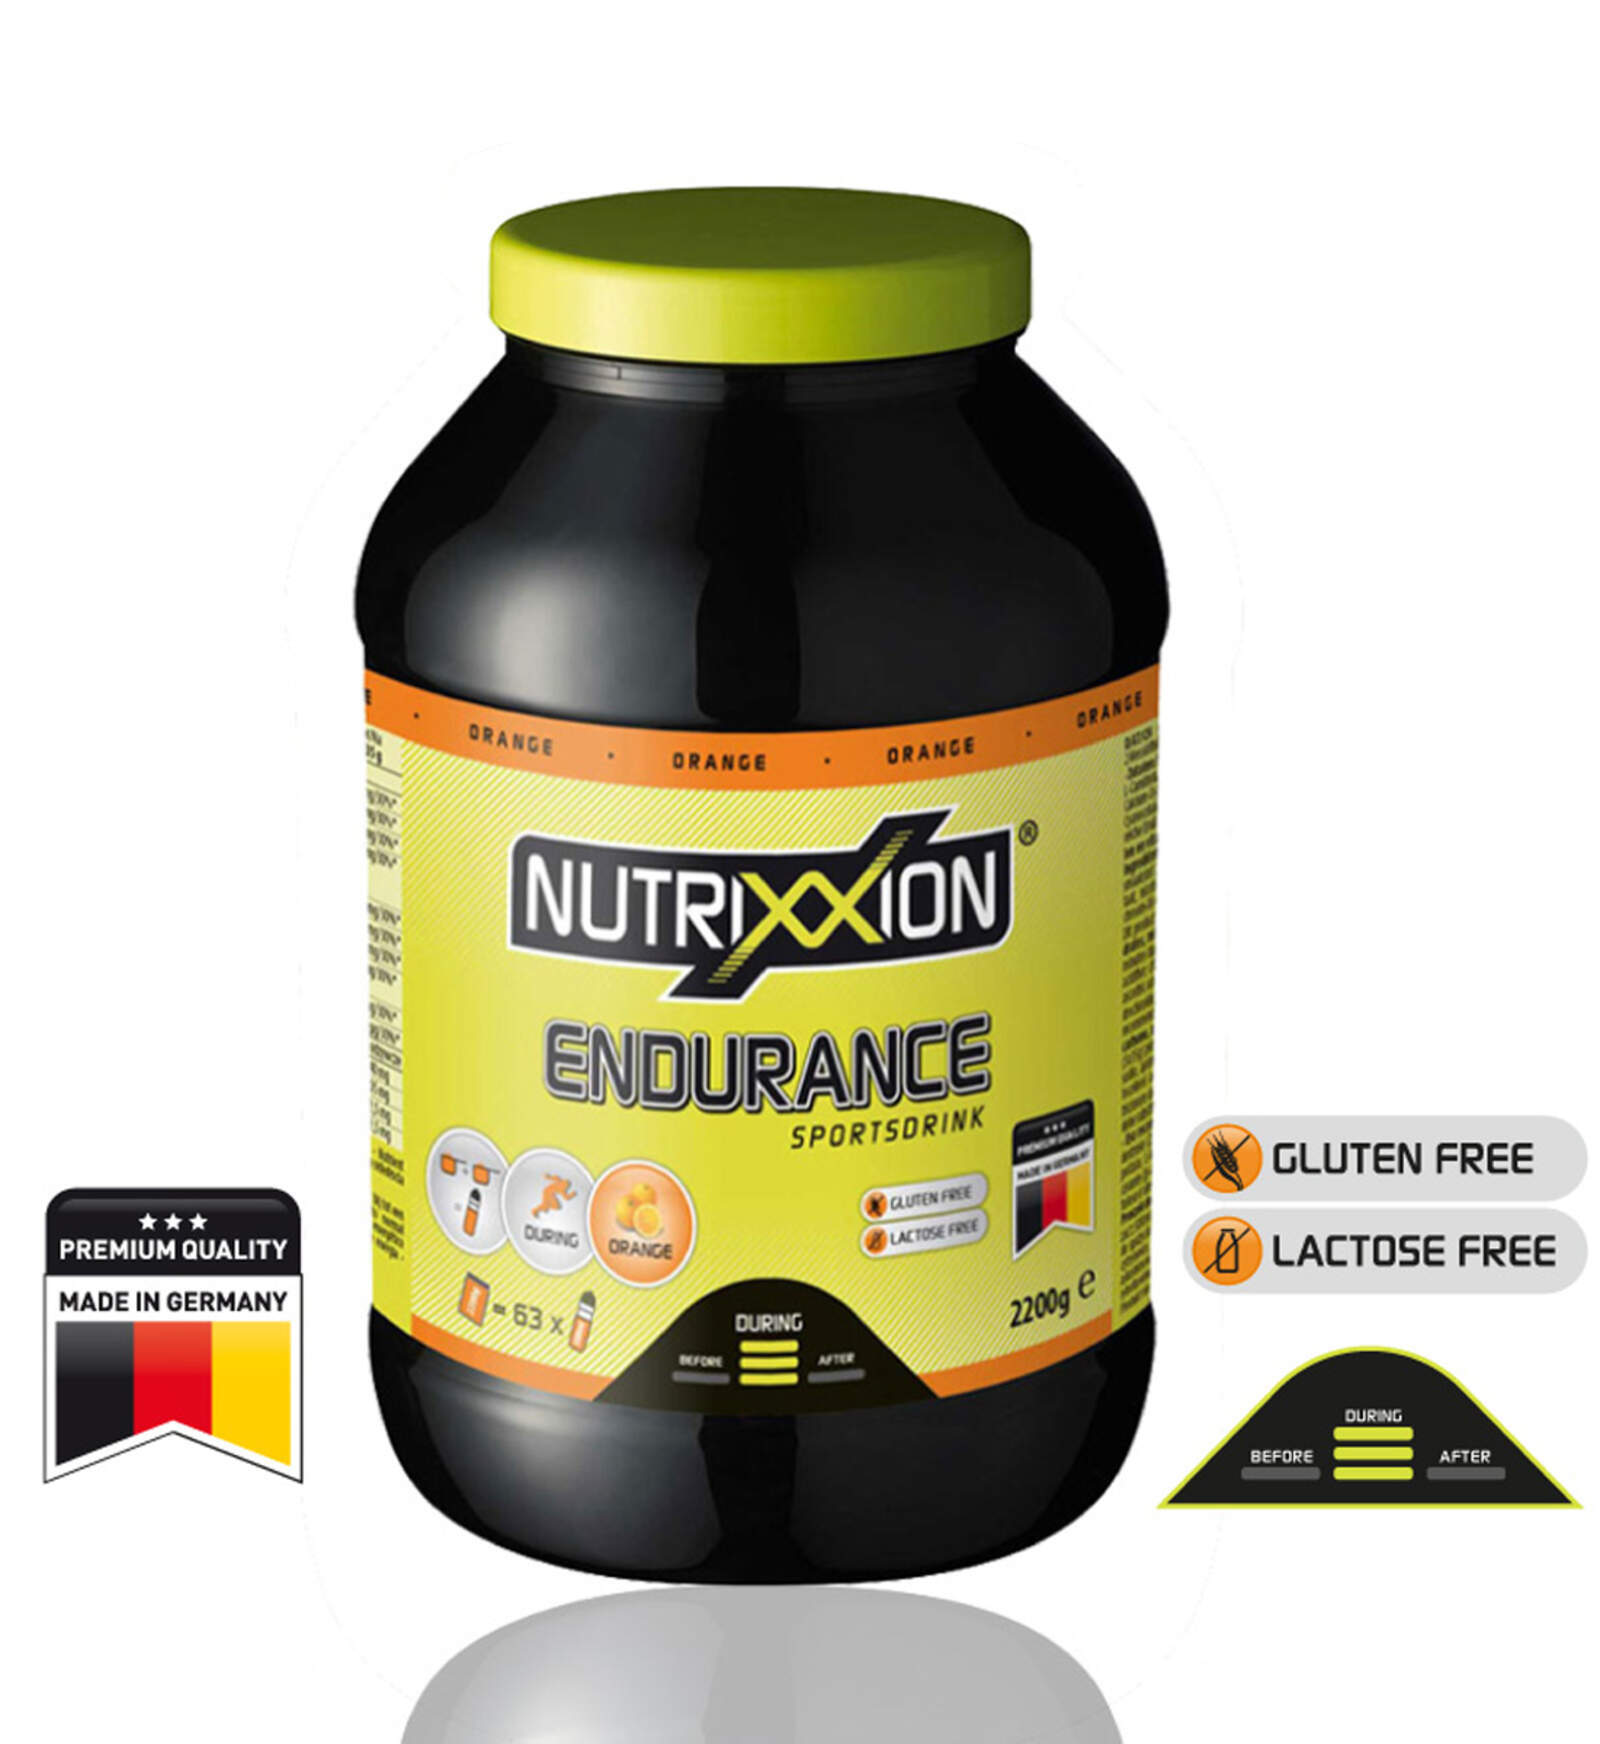 NUTRIXXION Énergie Boisson Endurance
Orange 2200g